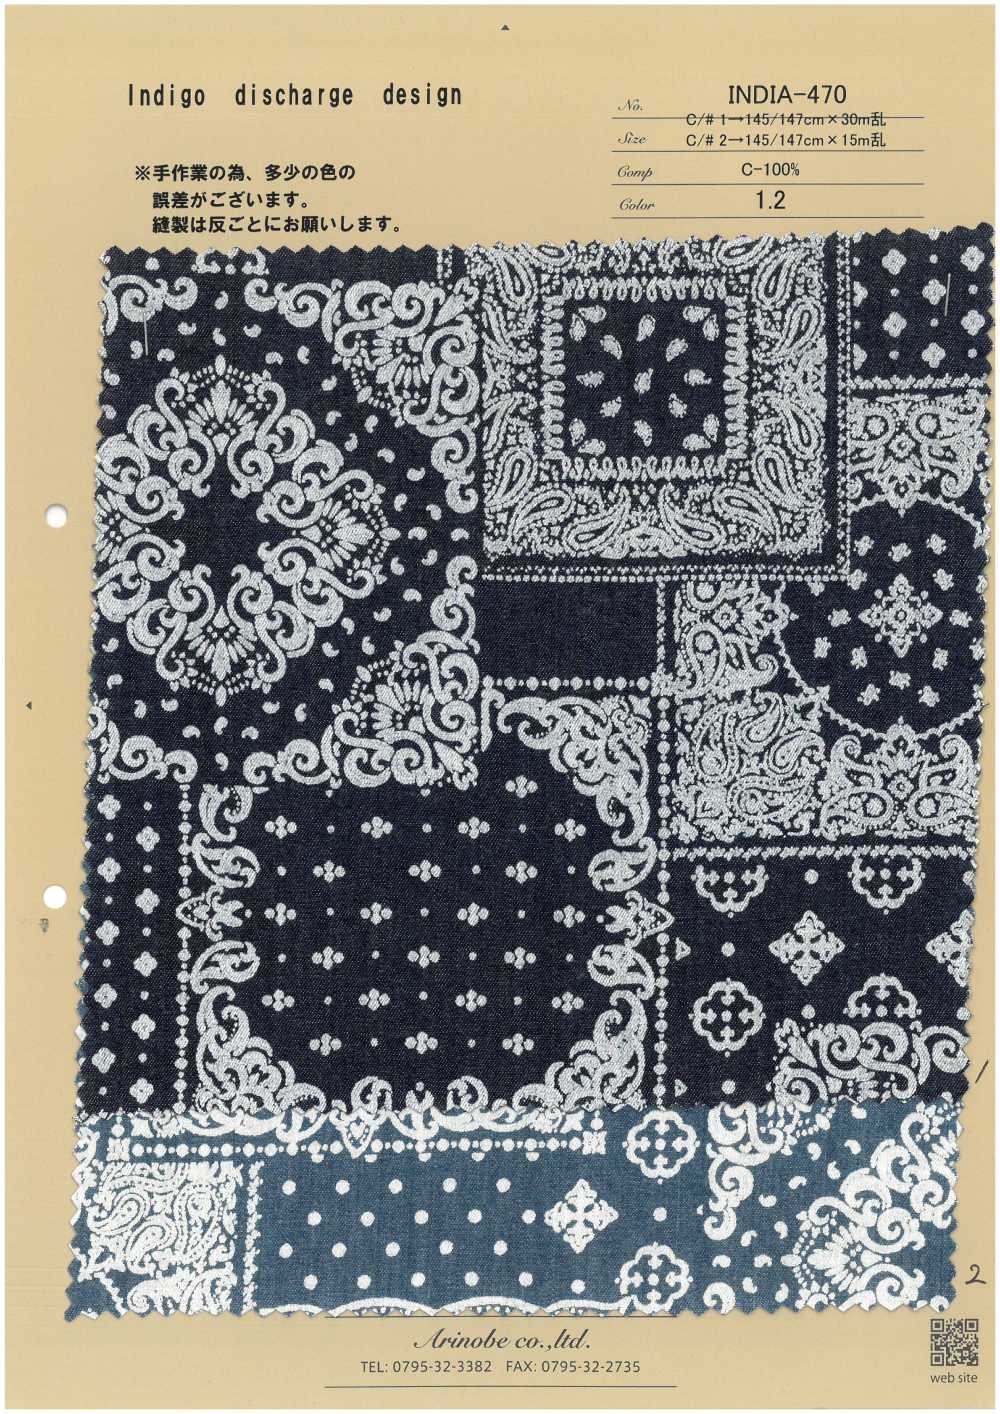 INDIA-470 Projeto De Descarga índigo[Têxtil / Tecido] ARINOBE CO., LTD.